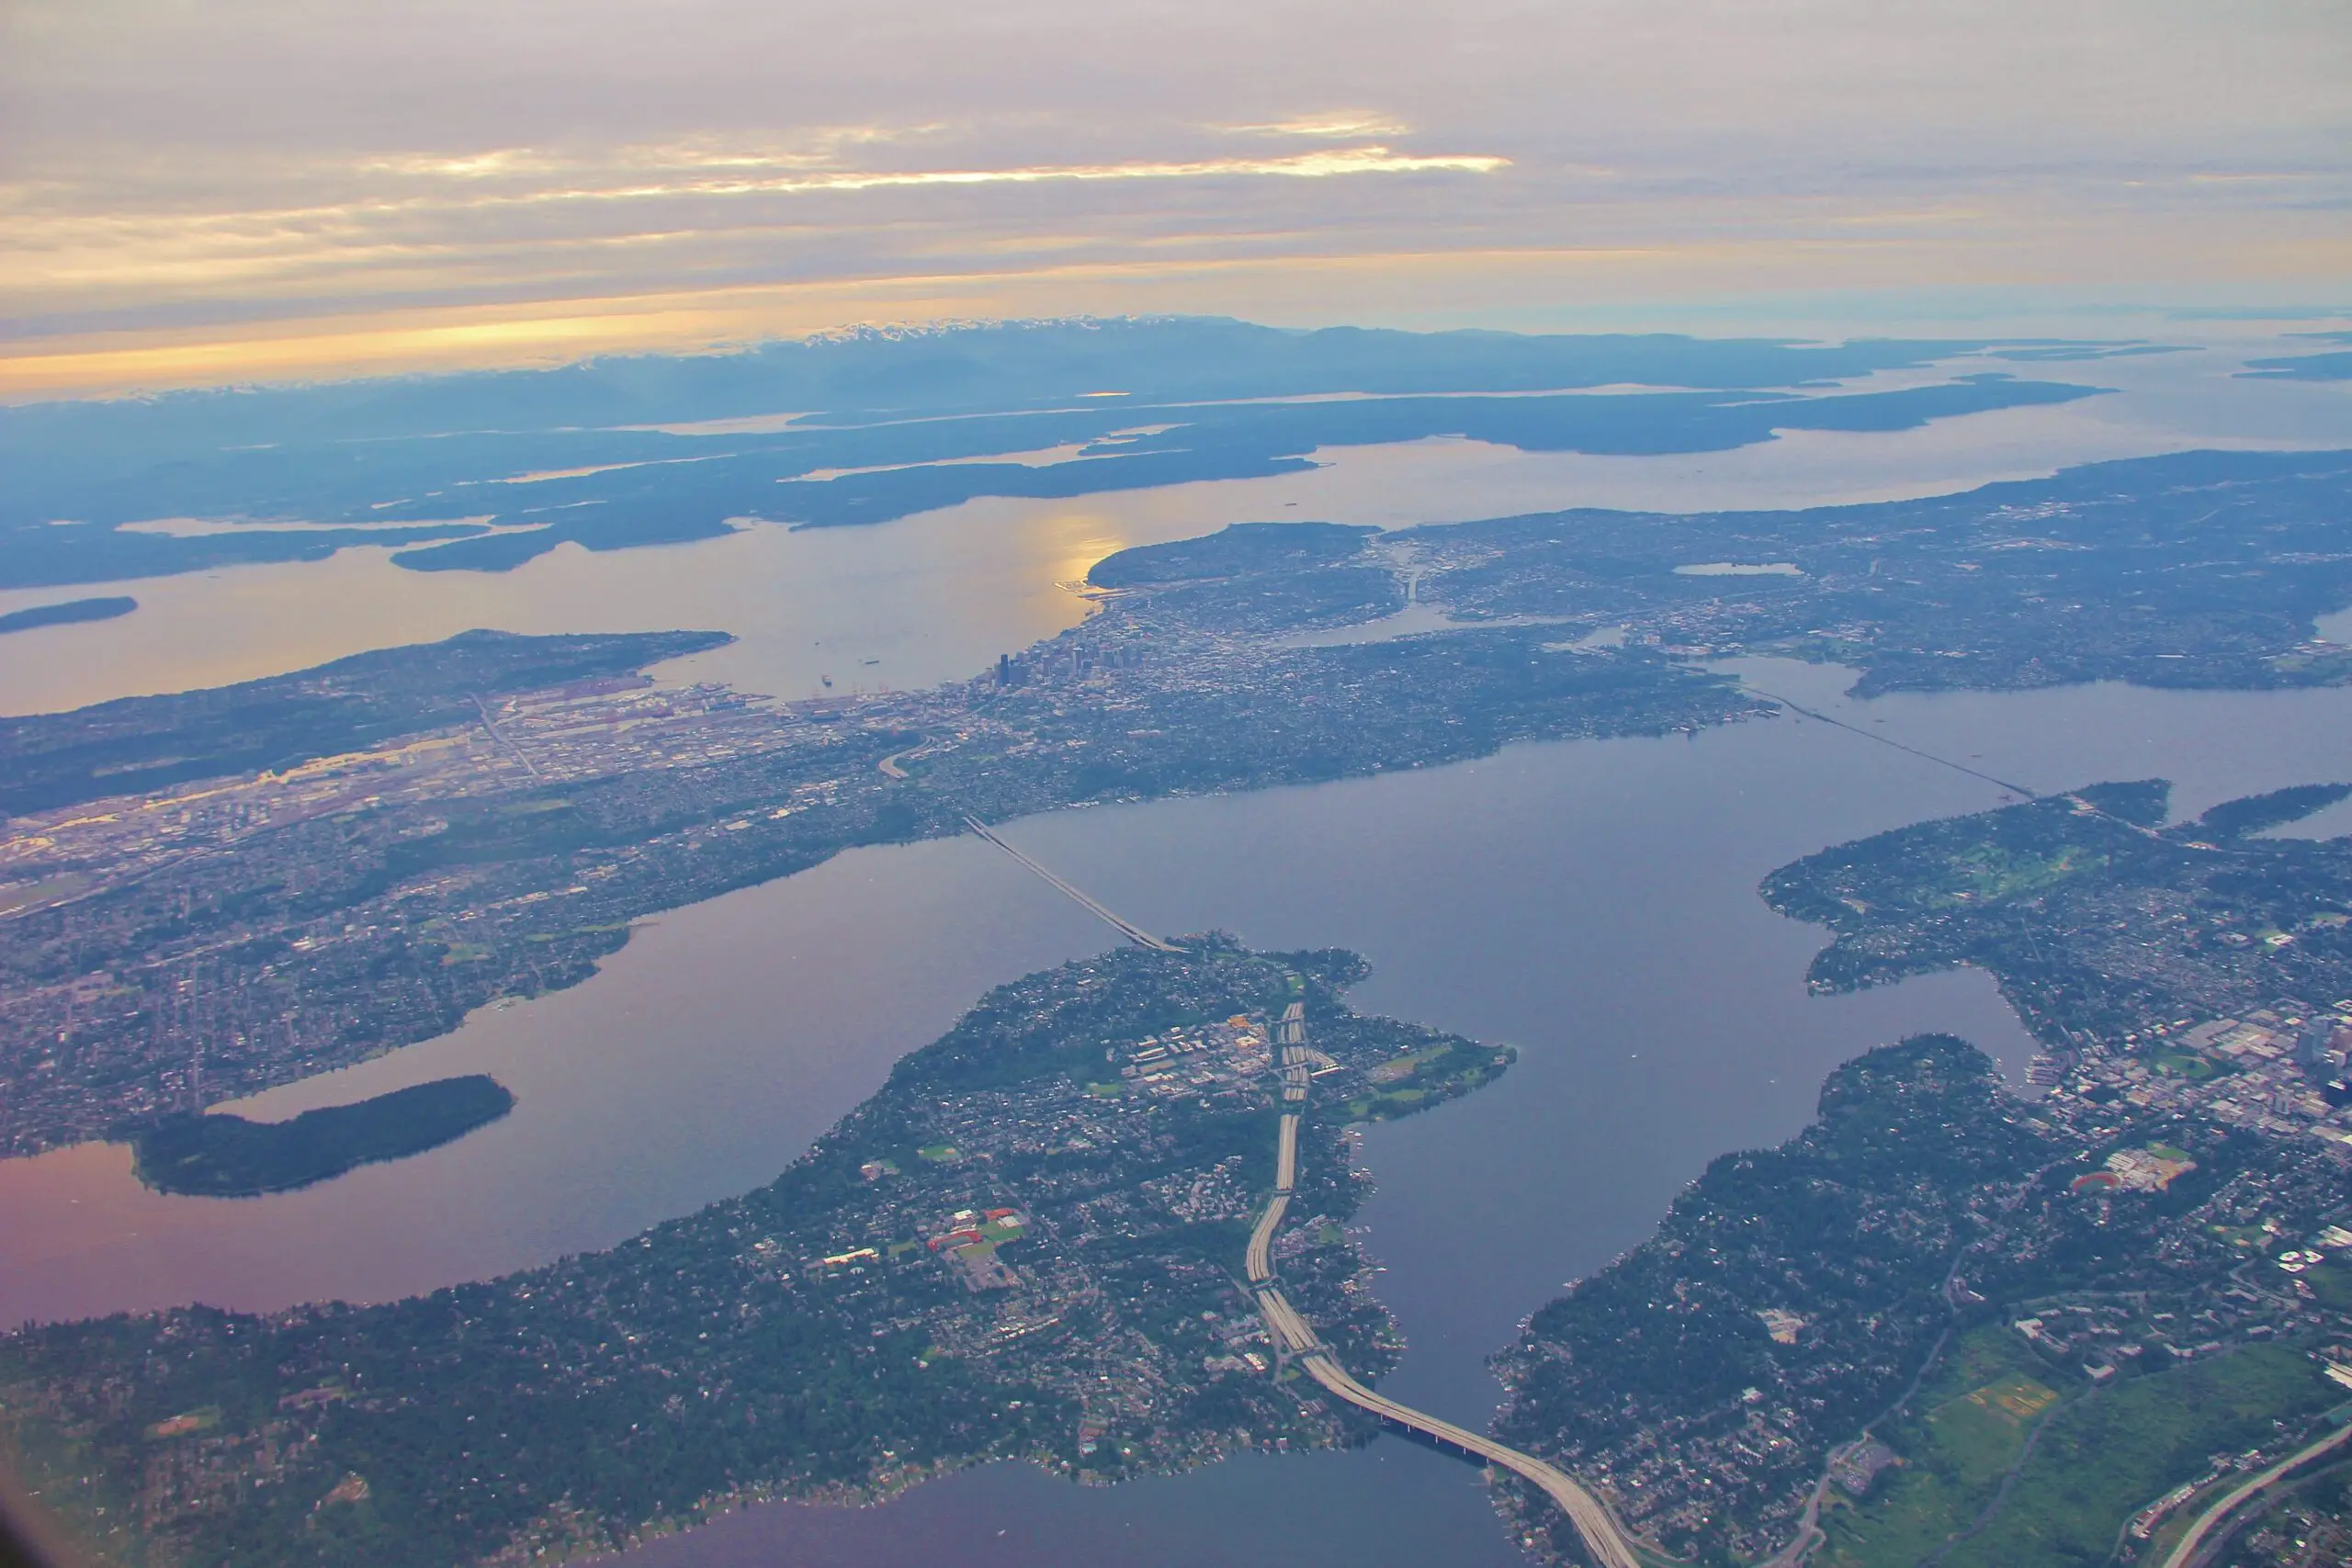 How Big is Seattle's Lake Washington